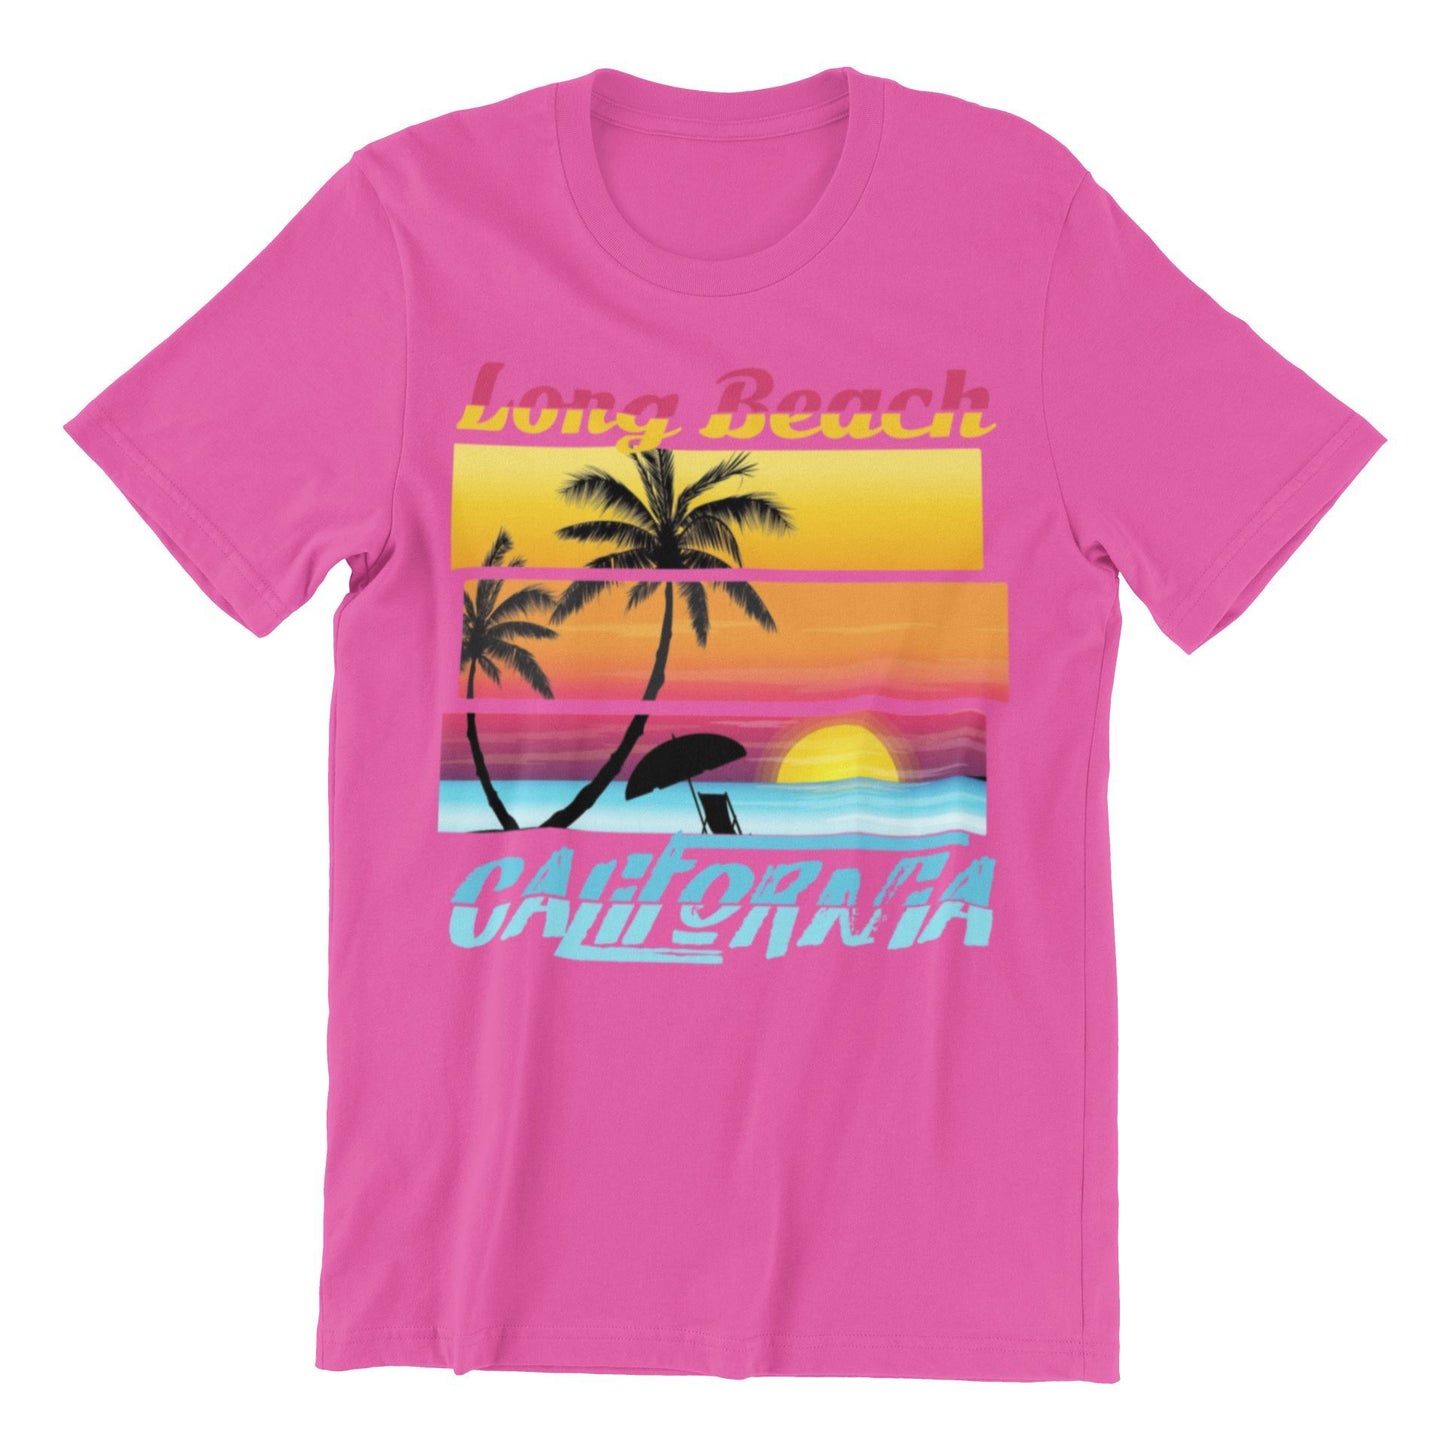 Long Beach California T-shirt